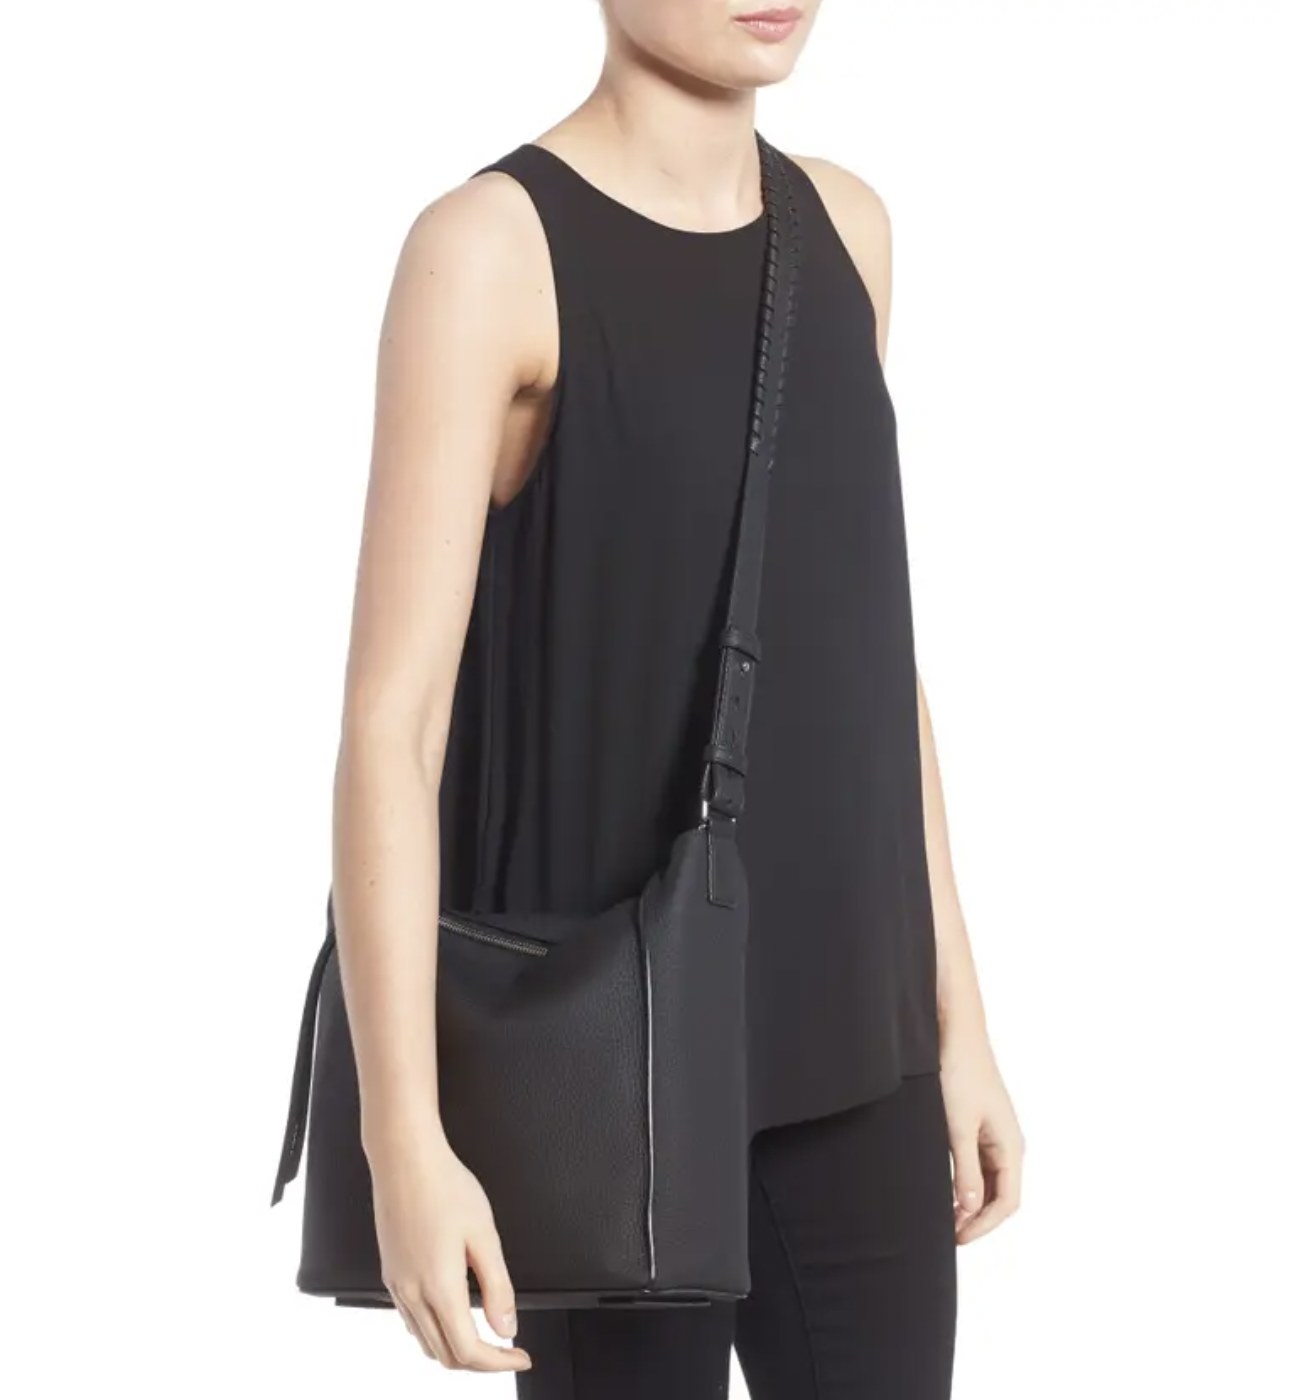 Model wearing the black purse crossbody